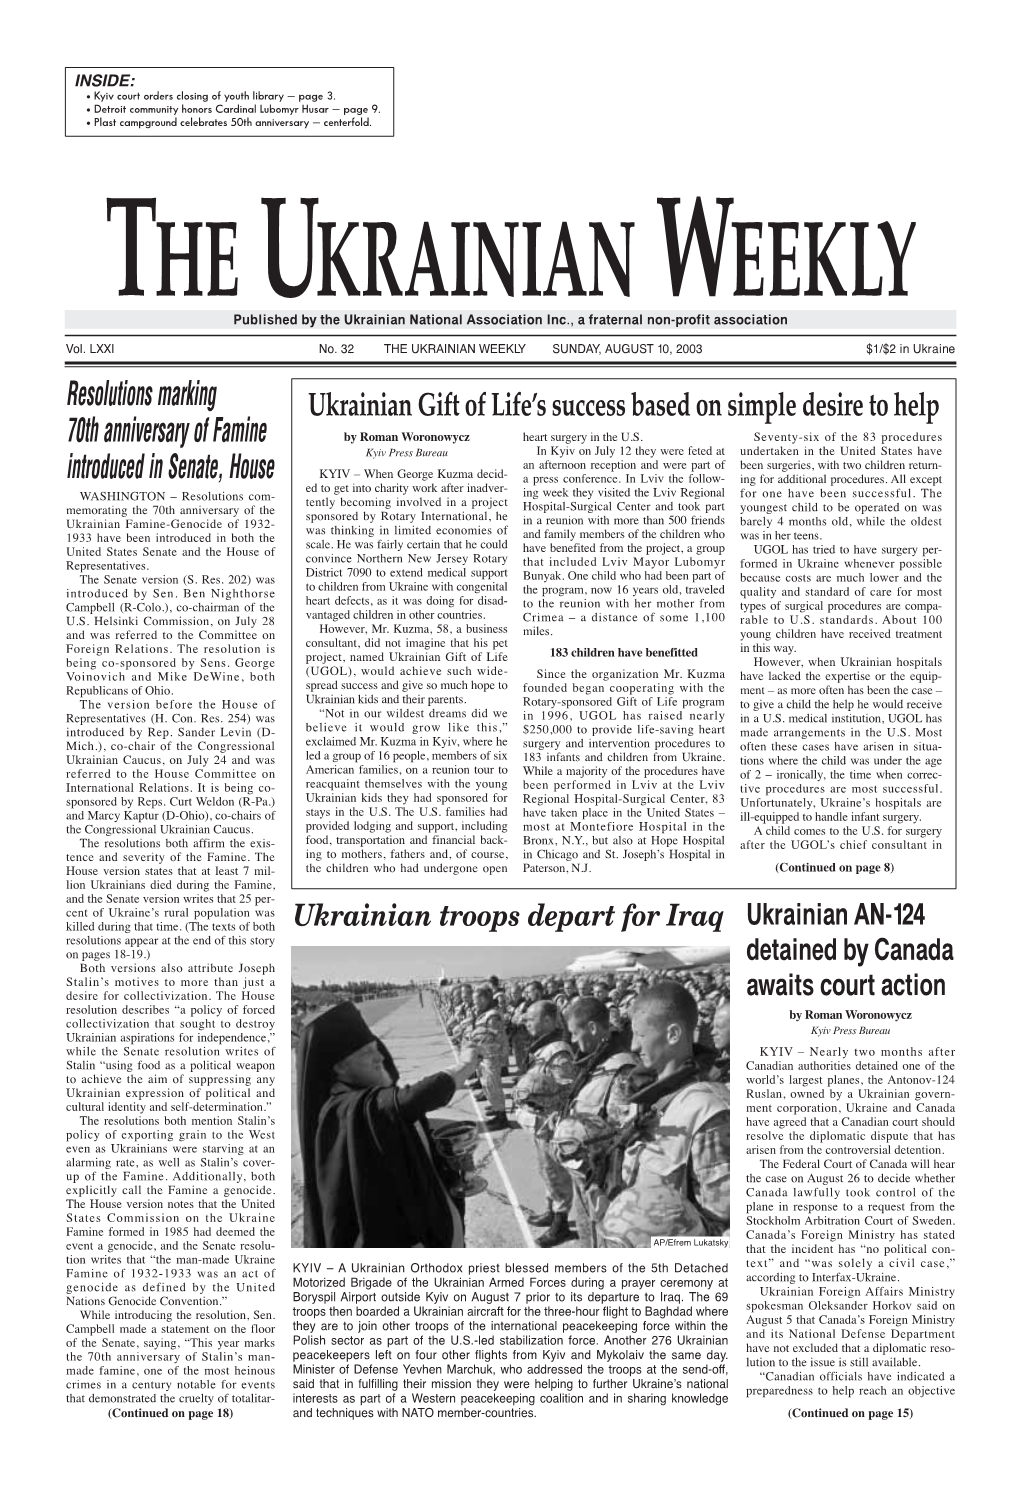 The Ukrainian Weekly 2003, No.32